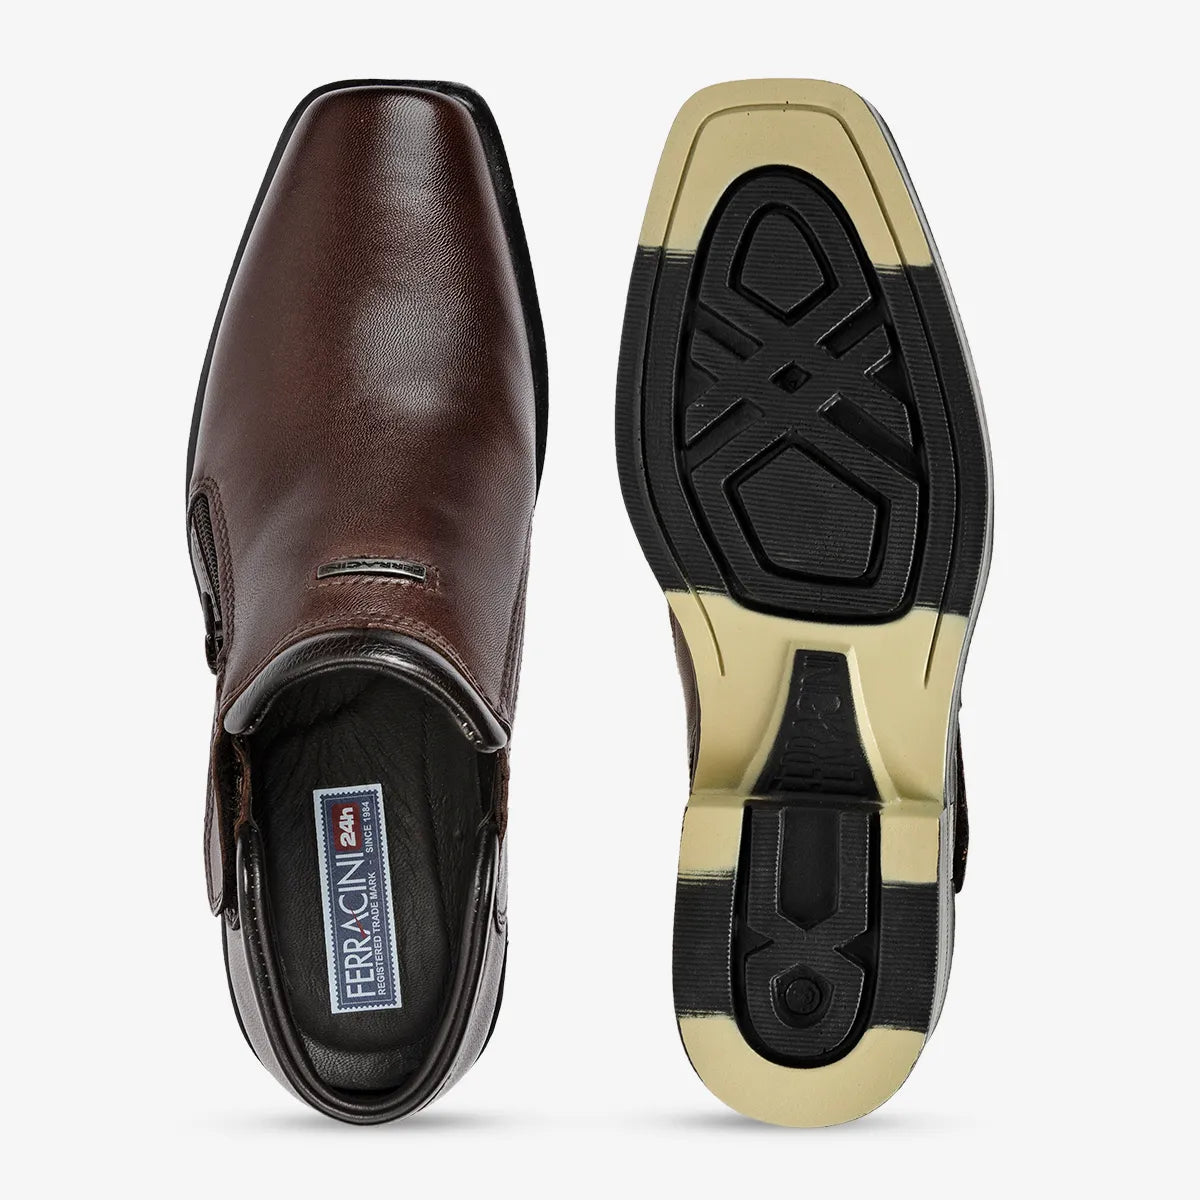 Ferracini Urban Way Men's Leather Shoe 6622